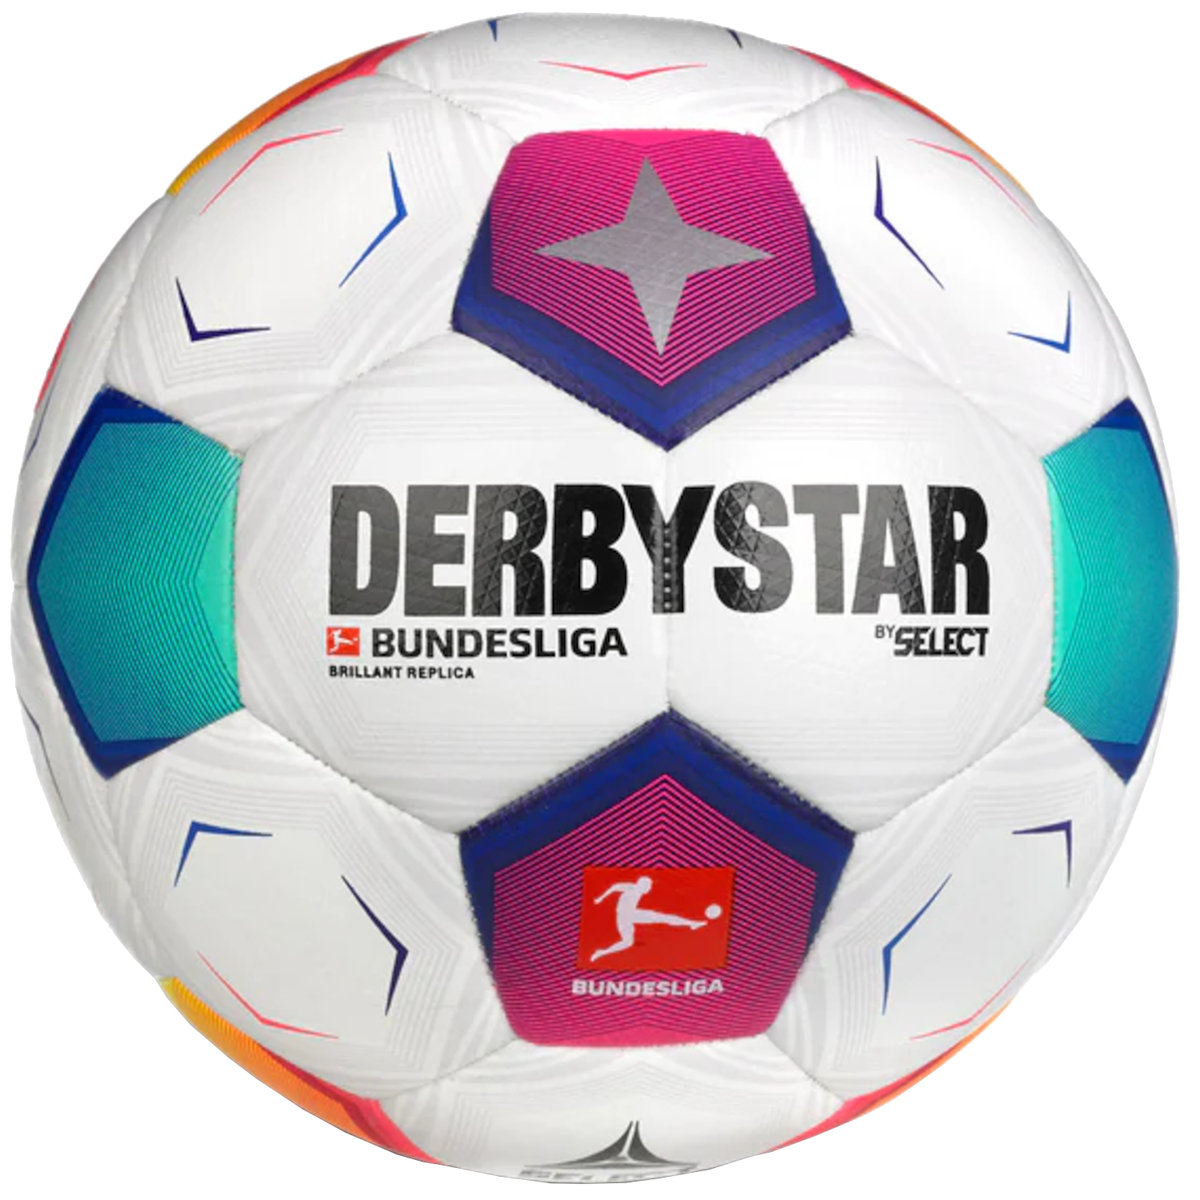 Derbystar Bundesliga Brillant Replica v23 FIFA Basic Ball 162008C, unisex, piłki do piłki nożnej, Białe